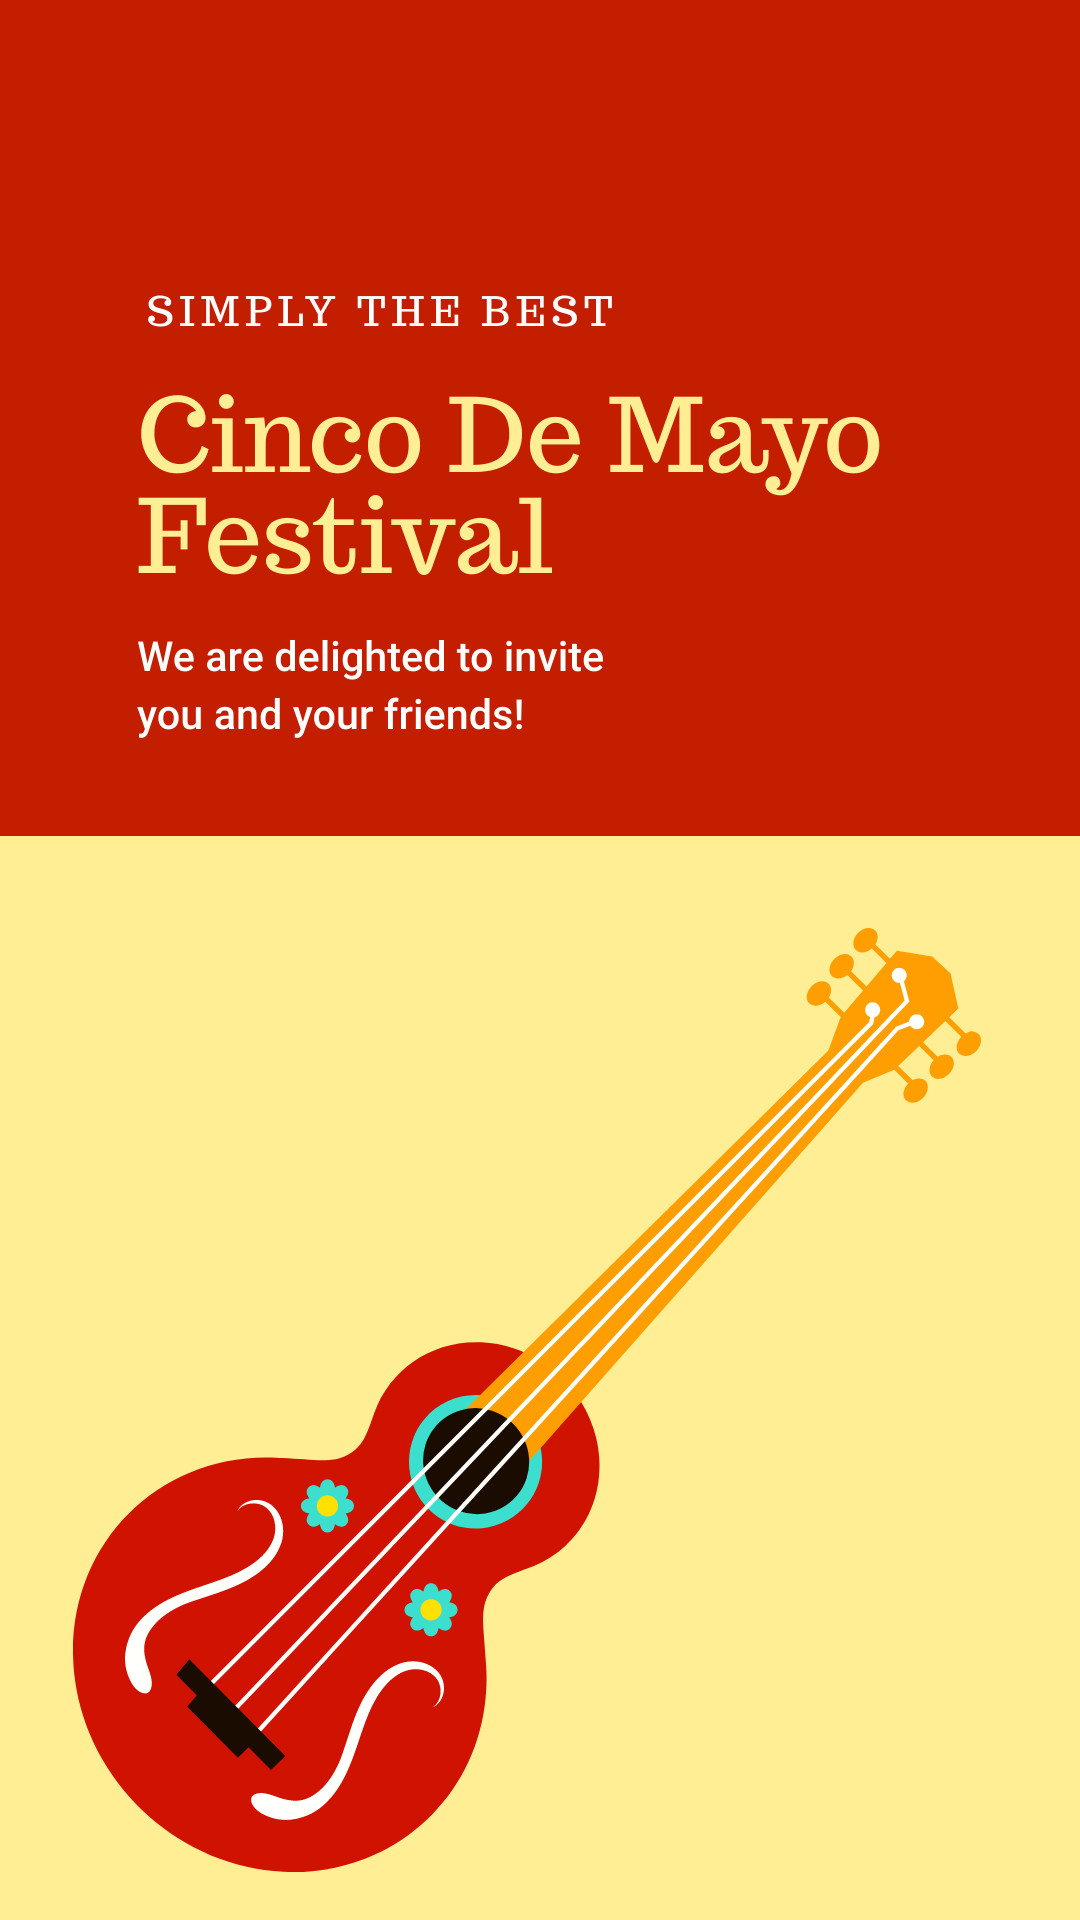 Best Cinco de Mayo Festival